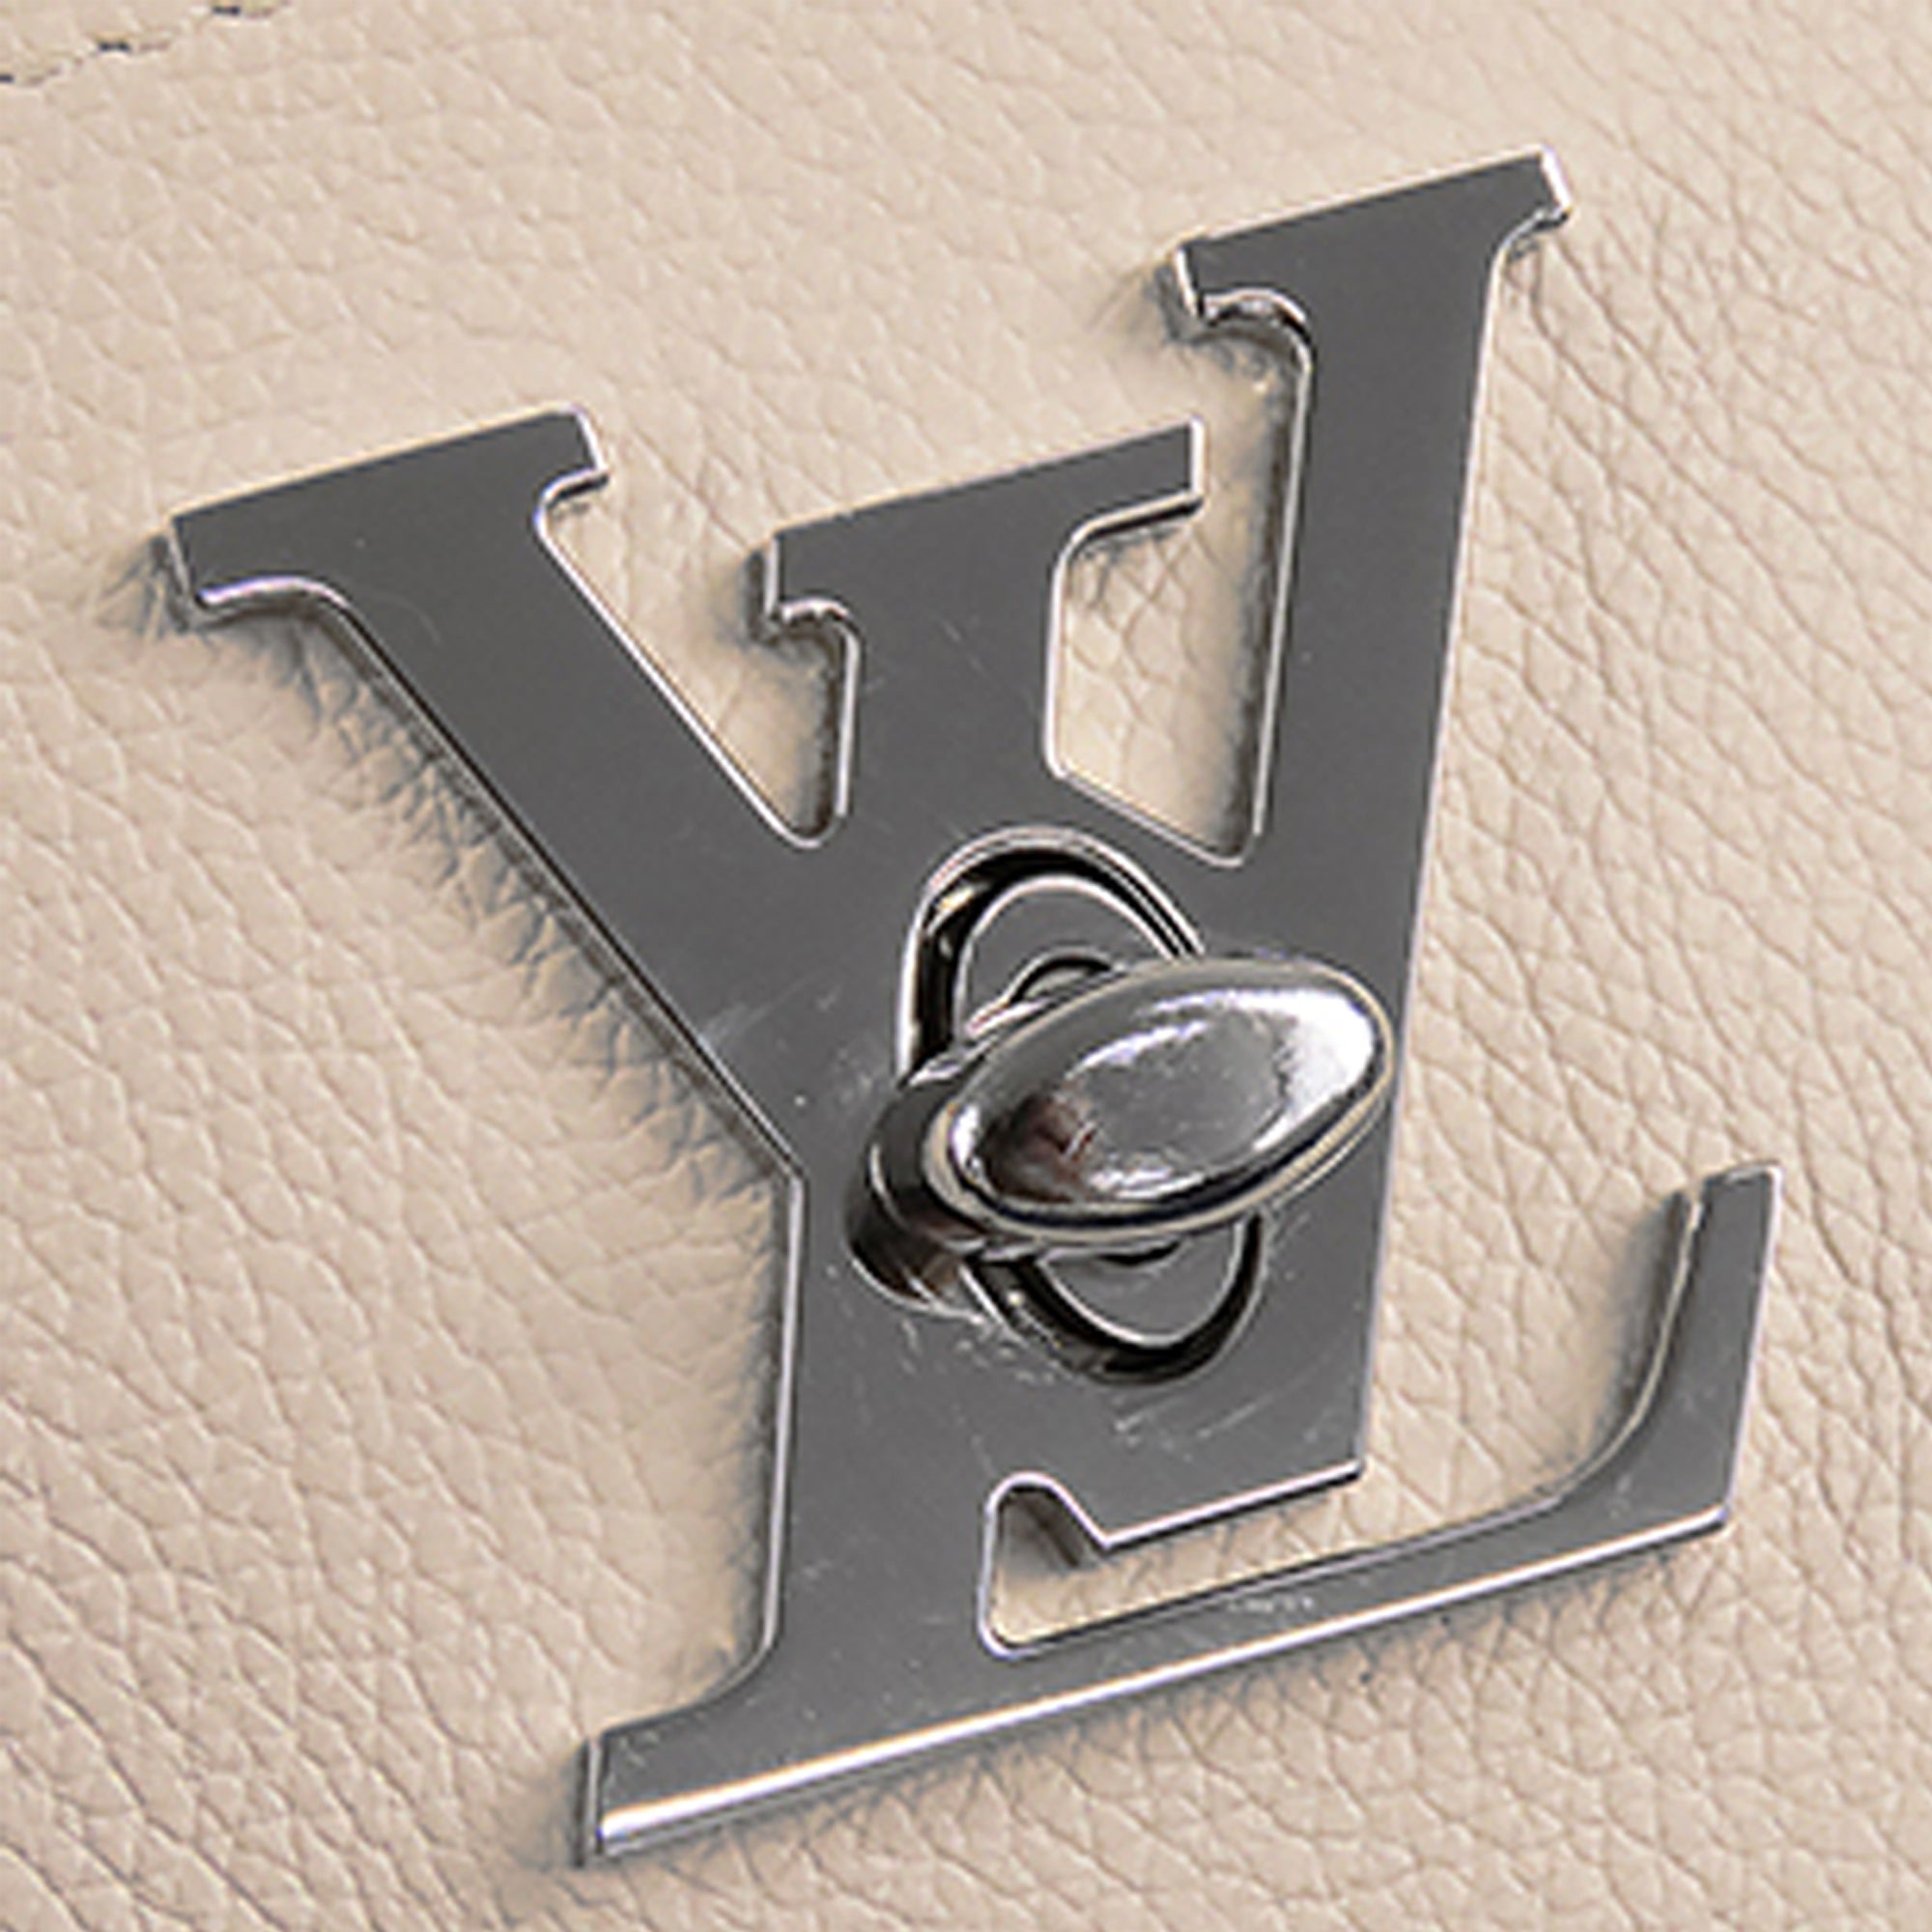 Louis Vuitton - Lock & Go Bag - Quartz - Leather - Women - Luxury